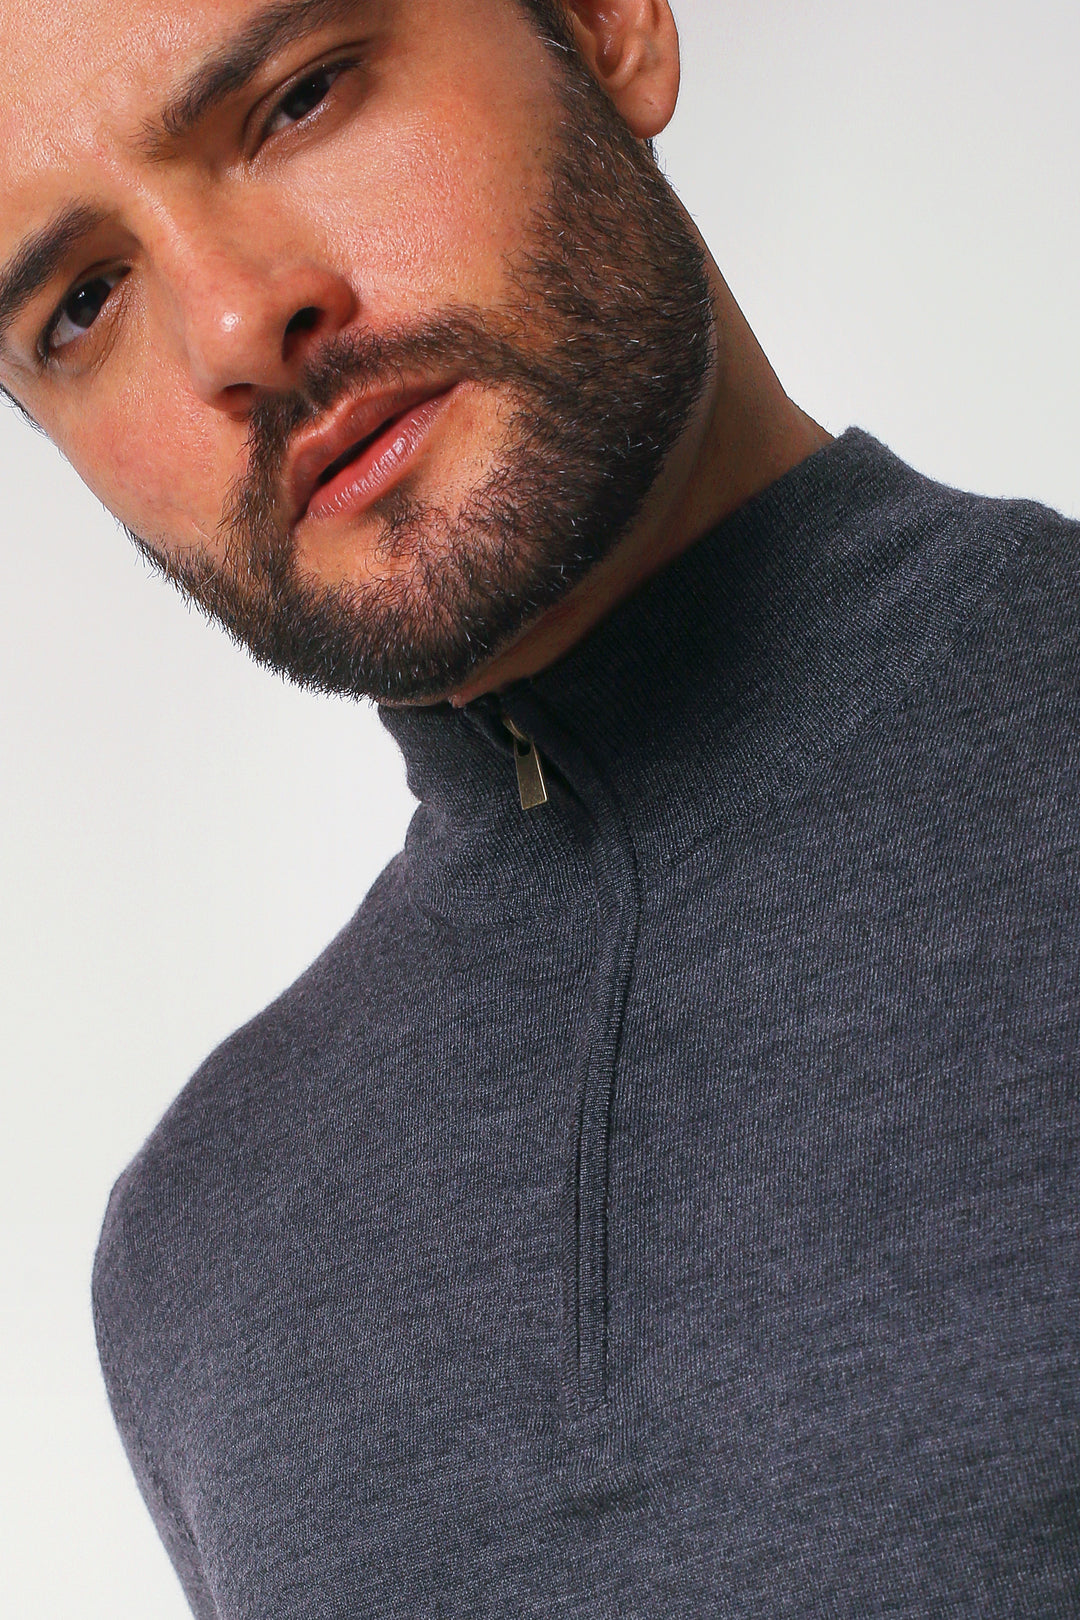 Merino Wool Quarter Zip Sweater - Charcoal